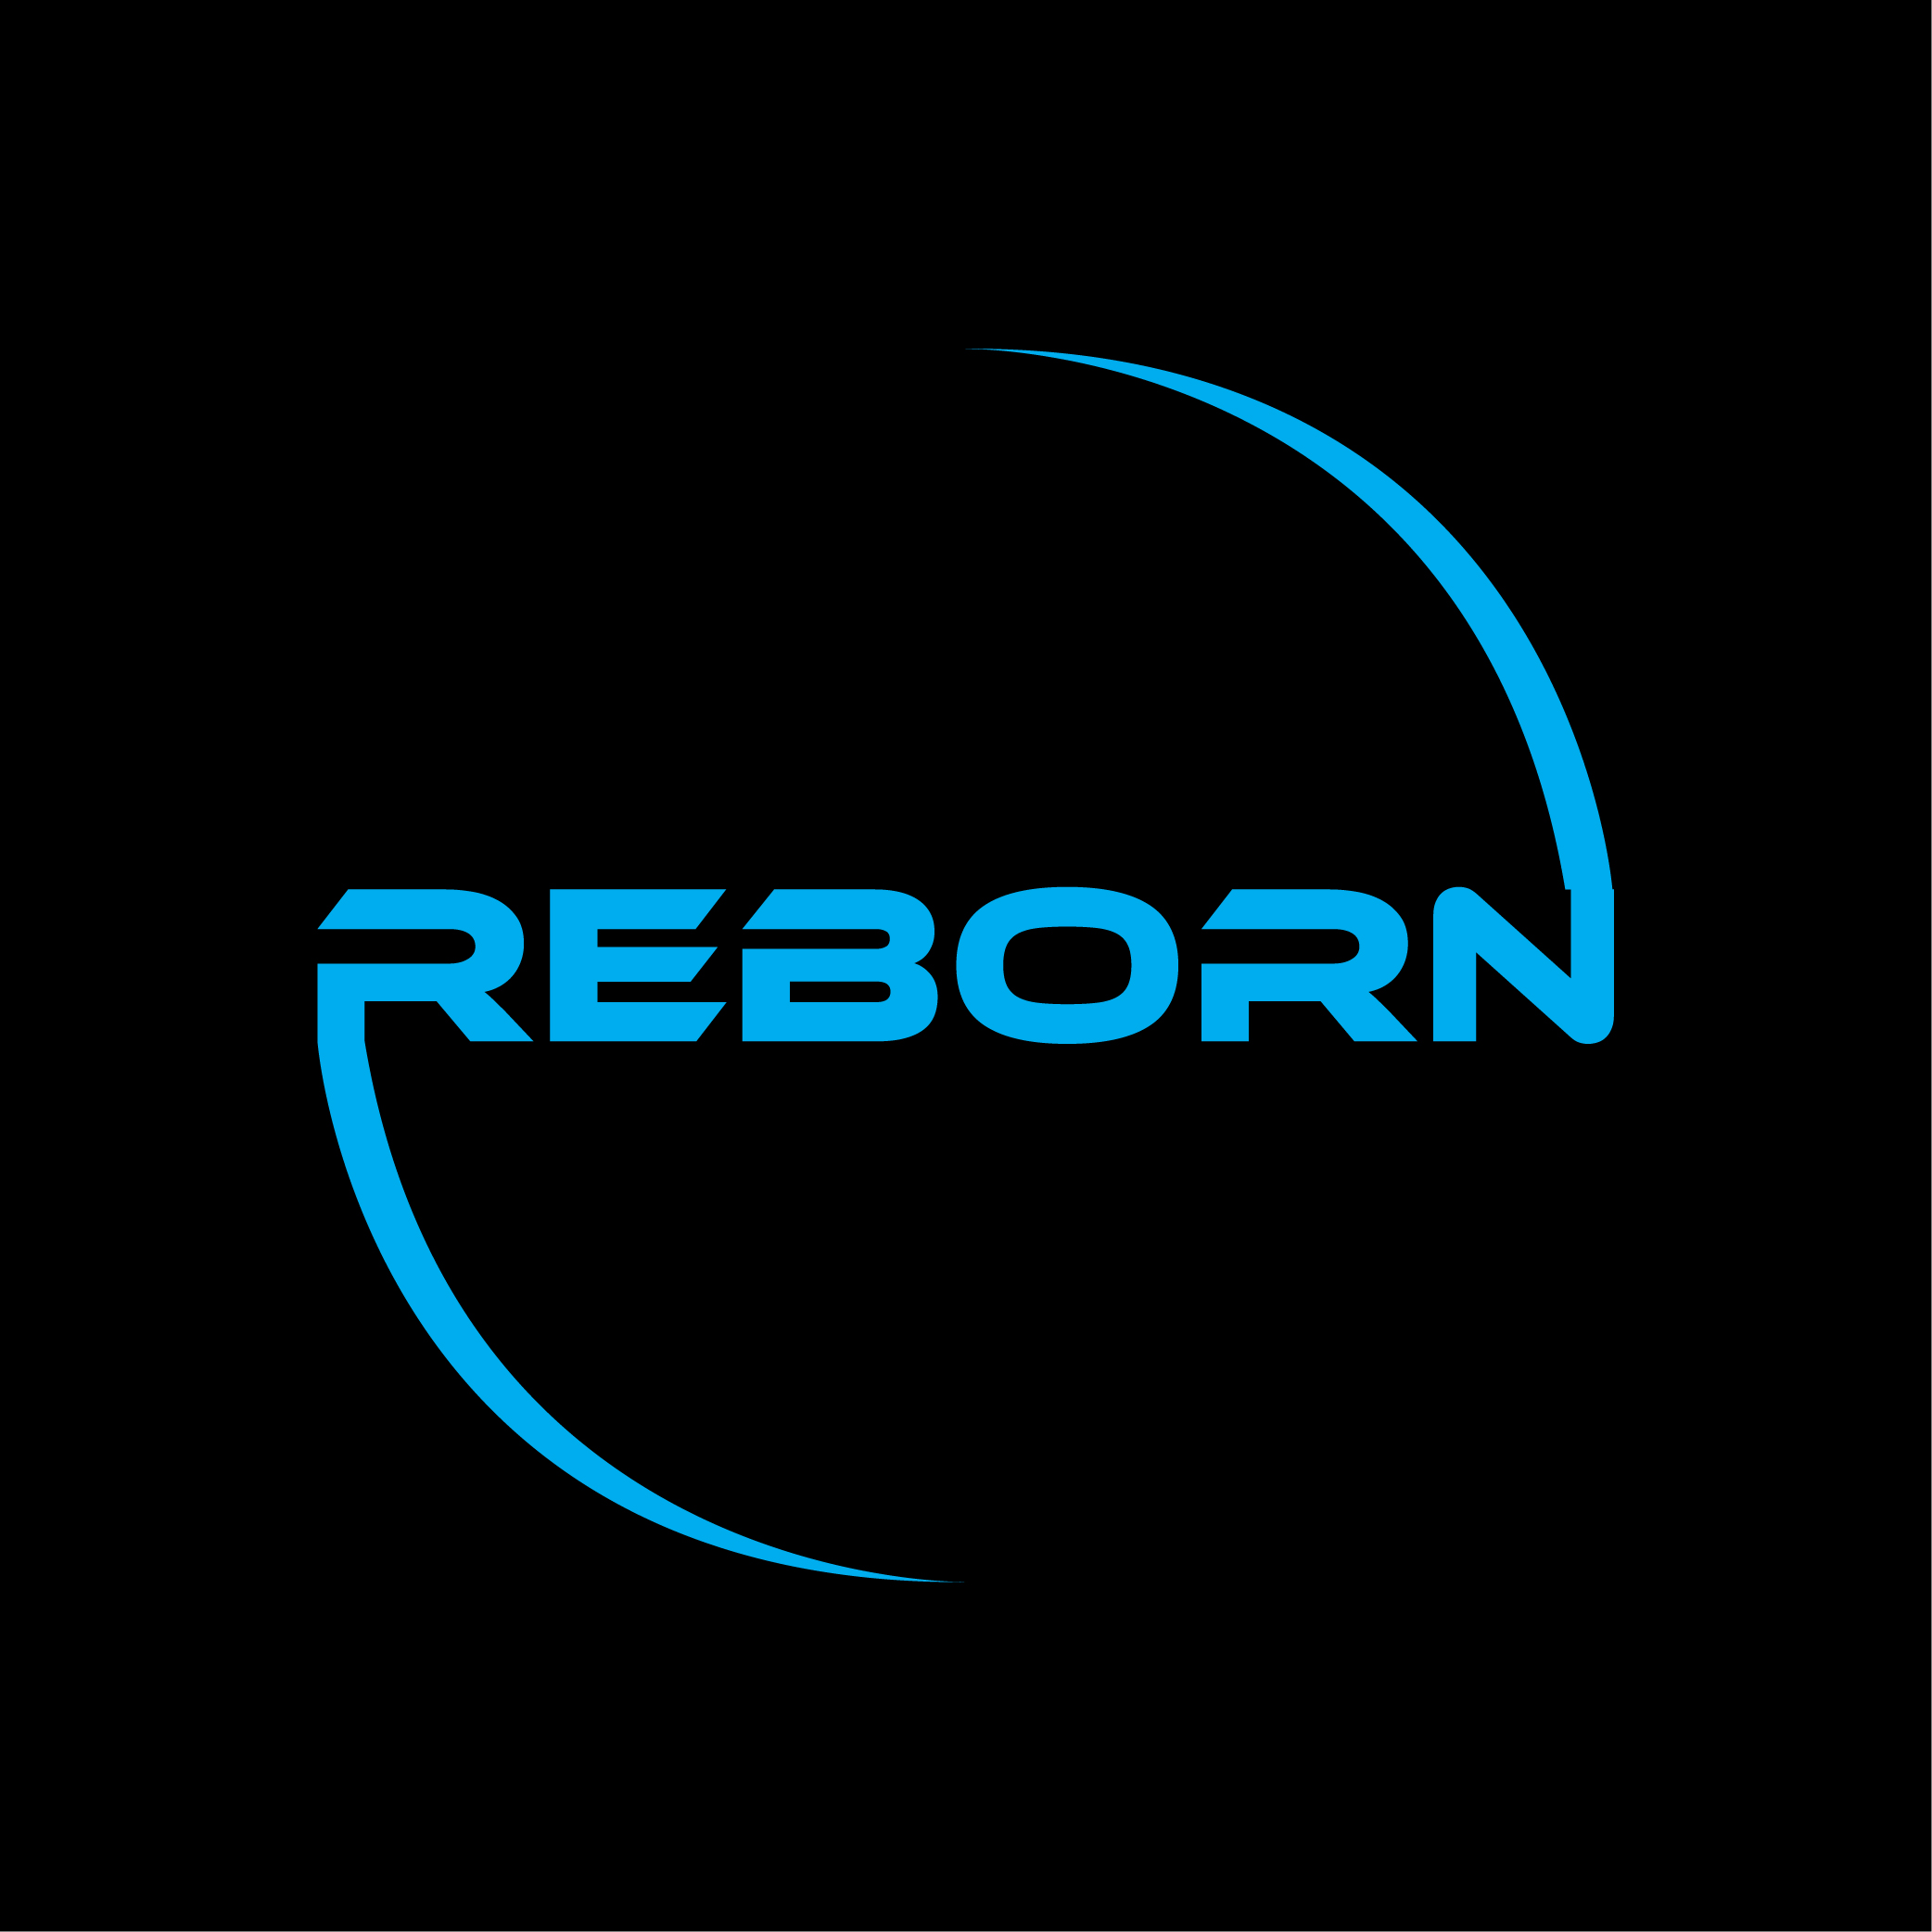 Reborn Logo Design Vector Image Template preview image.